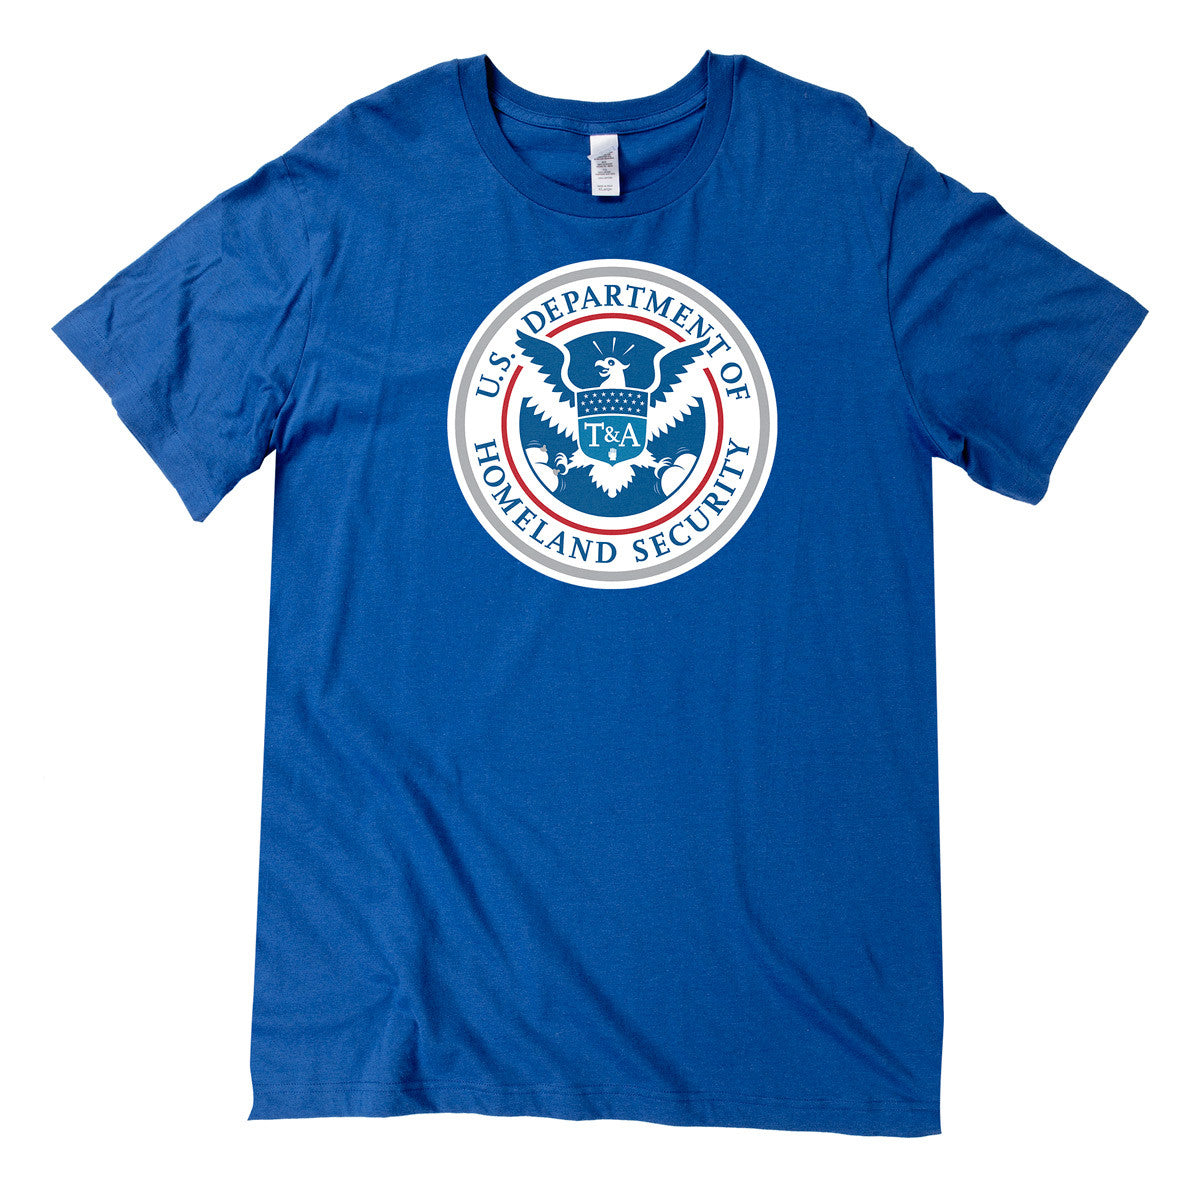 TSA T&A Shirt